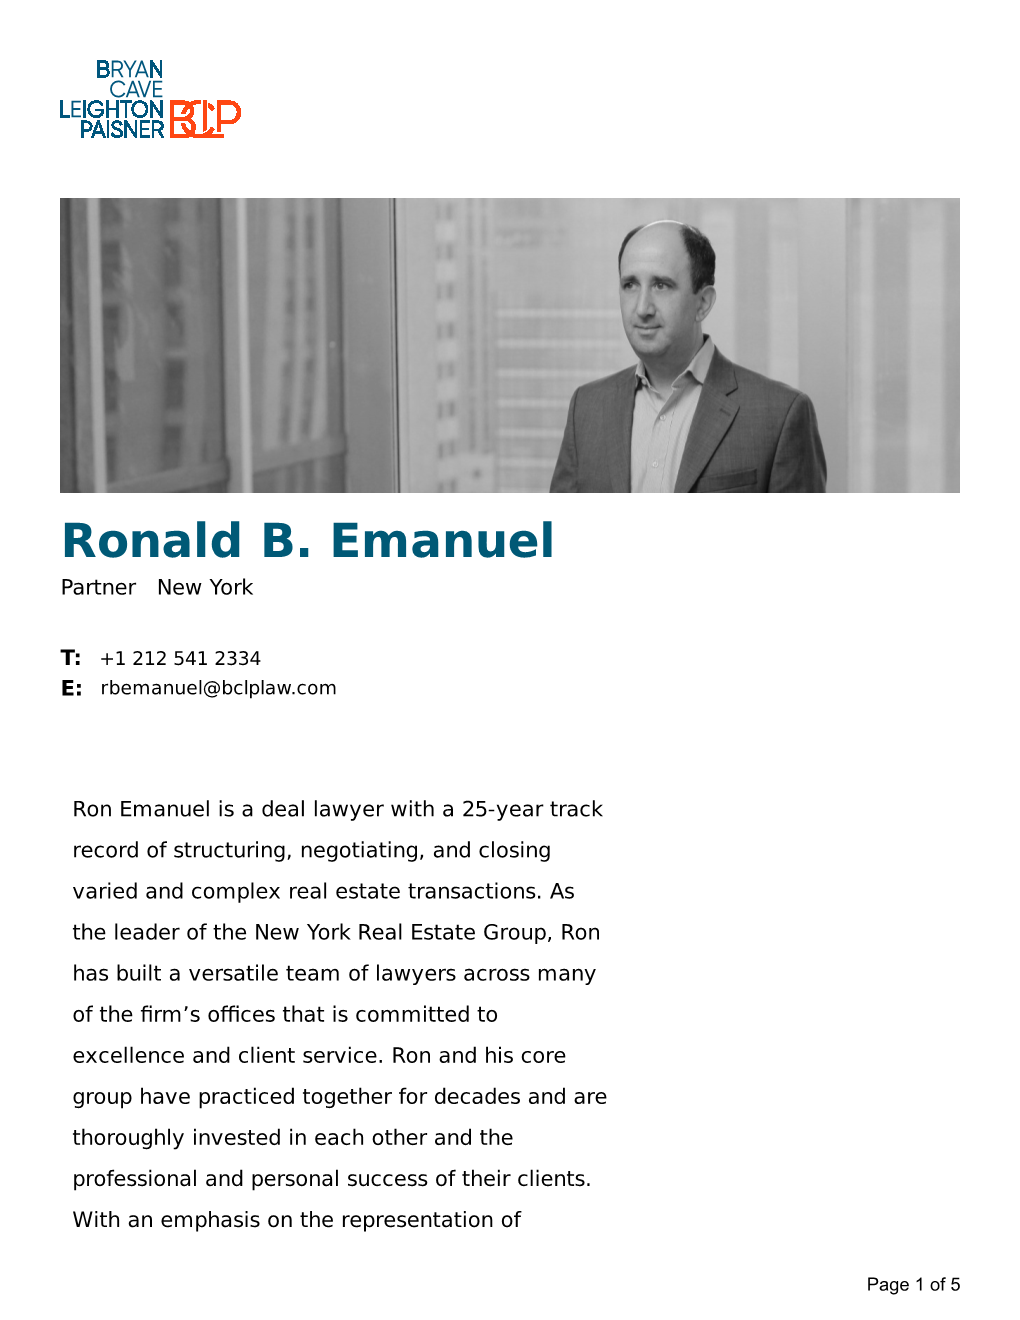 Ronald B. Emanuel Partner New York